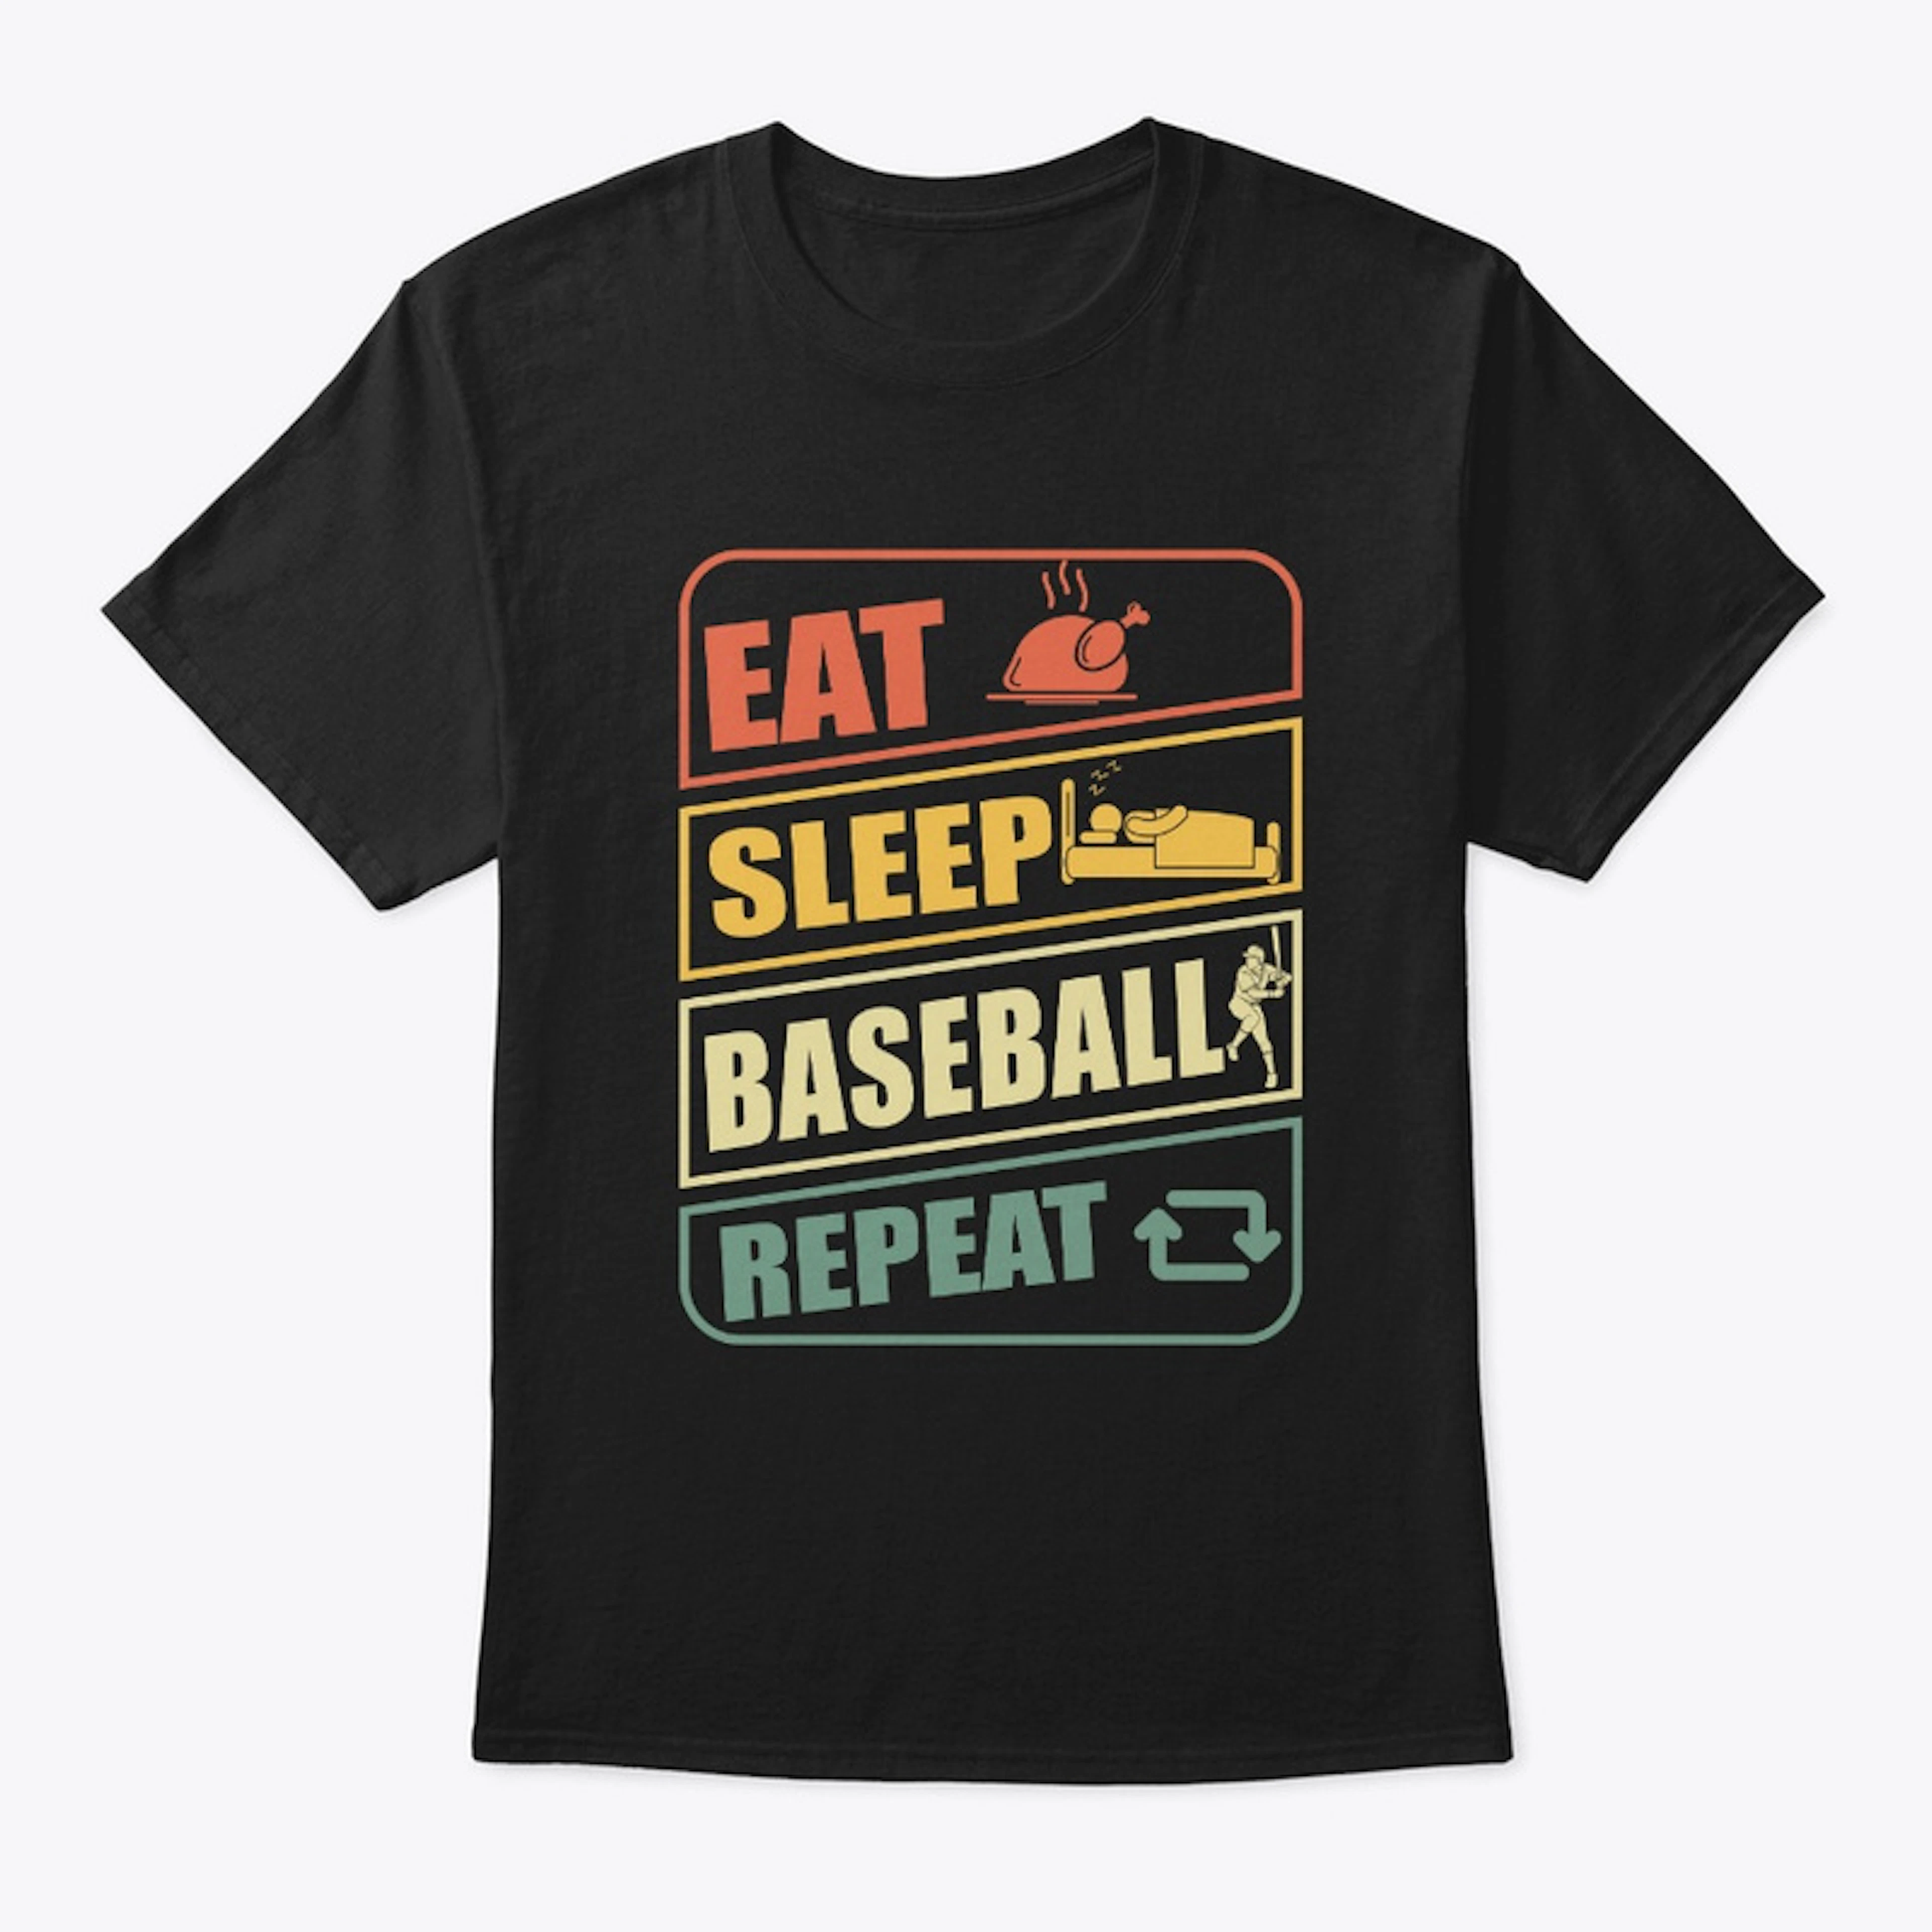 Eat. Sleep. Baseball. Repeat!